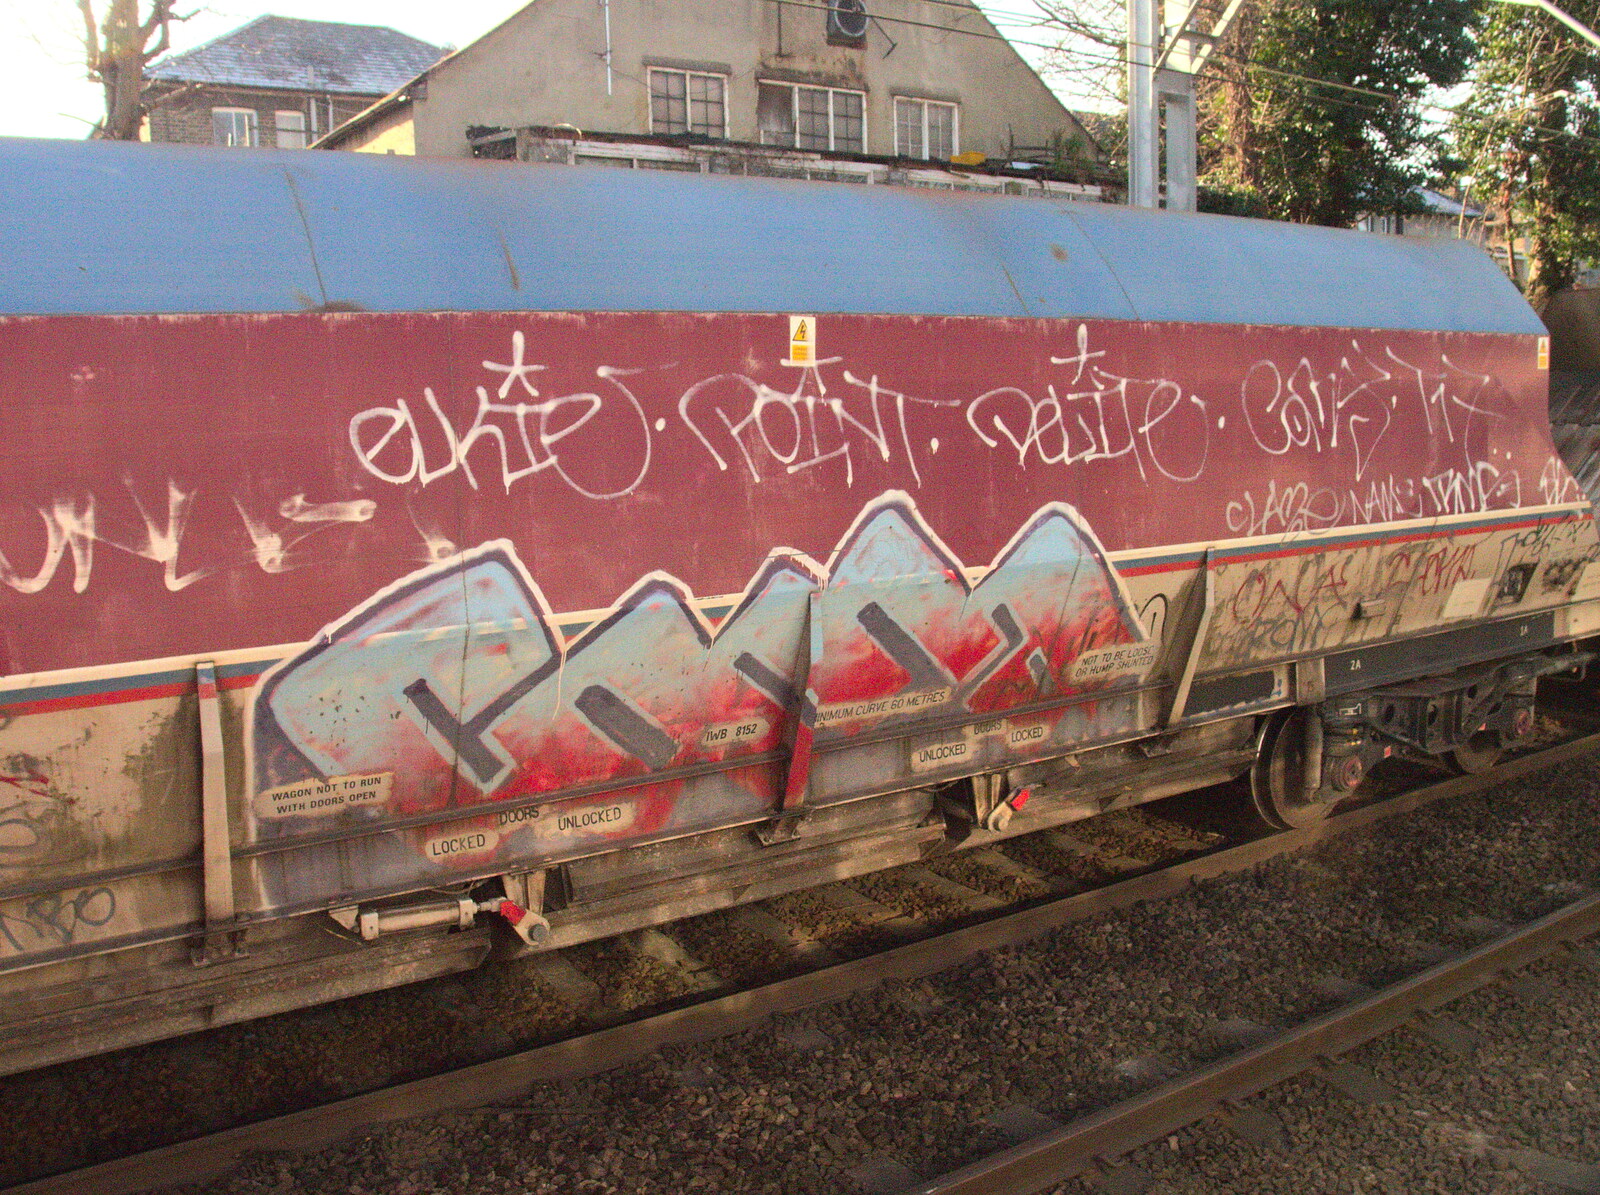 More graffiti tags on railway rolling stock from A SwiftKey Power Cut, Southwark Bridge Road, London - 4th March 2016